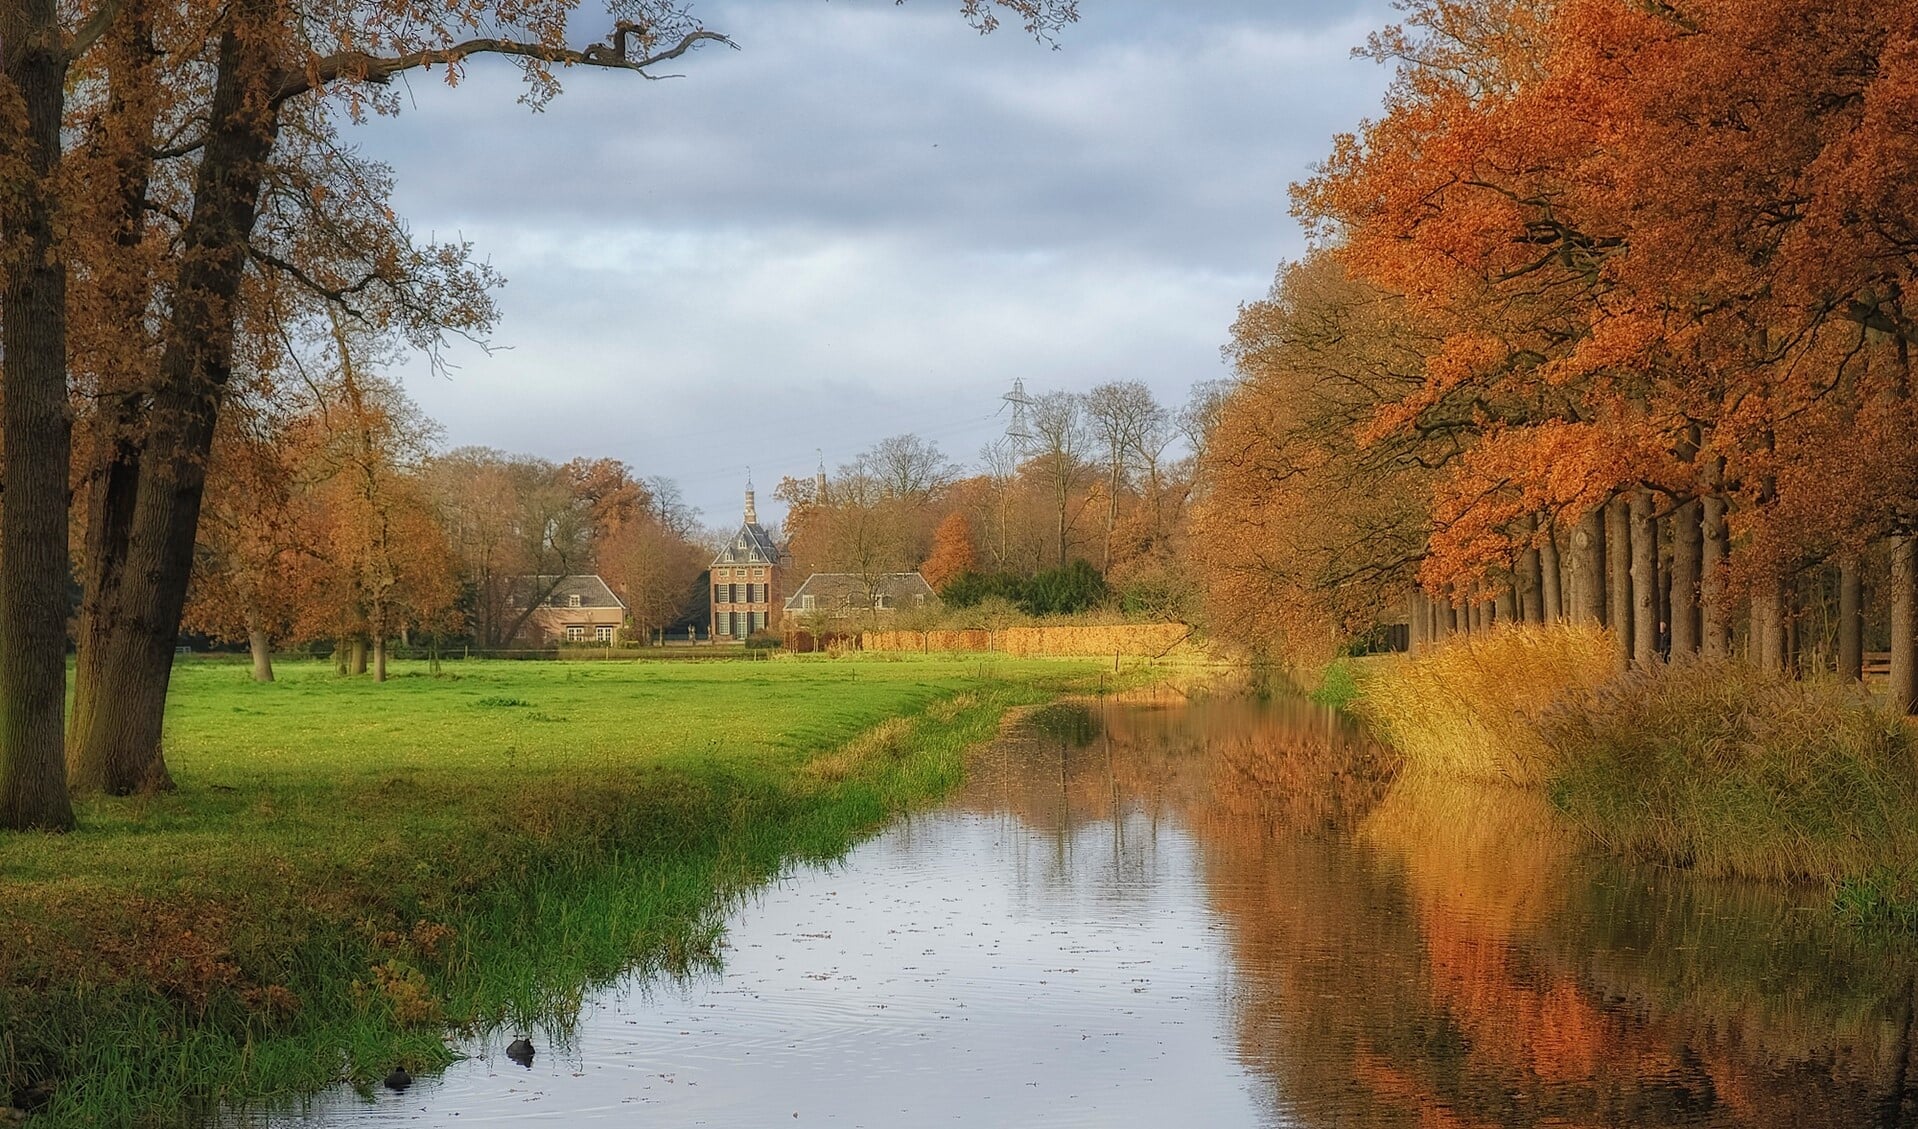 Landgoed Duivenvoorde in de hersfst (foto: J.H. Bakhuys).